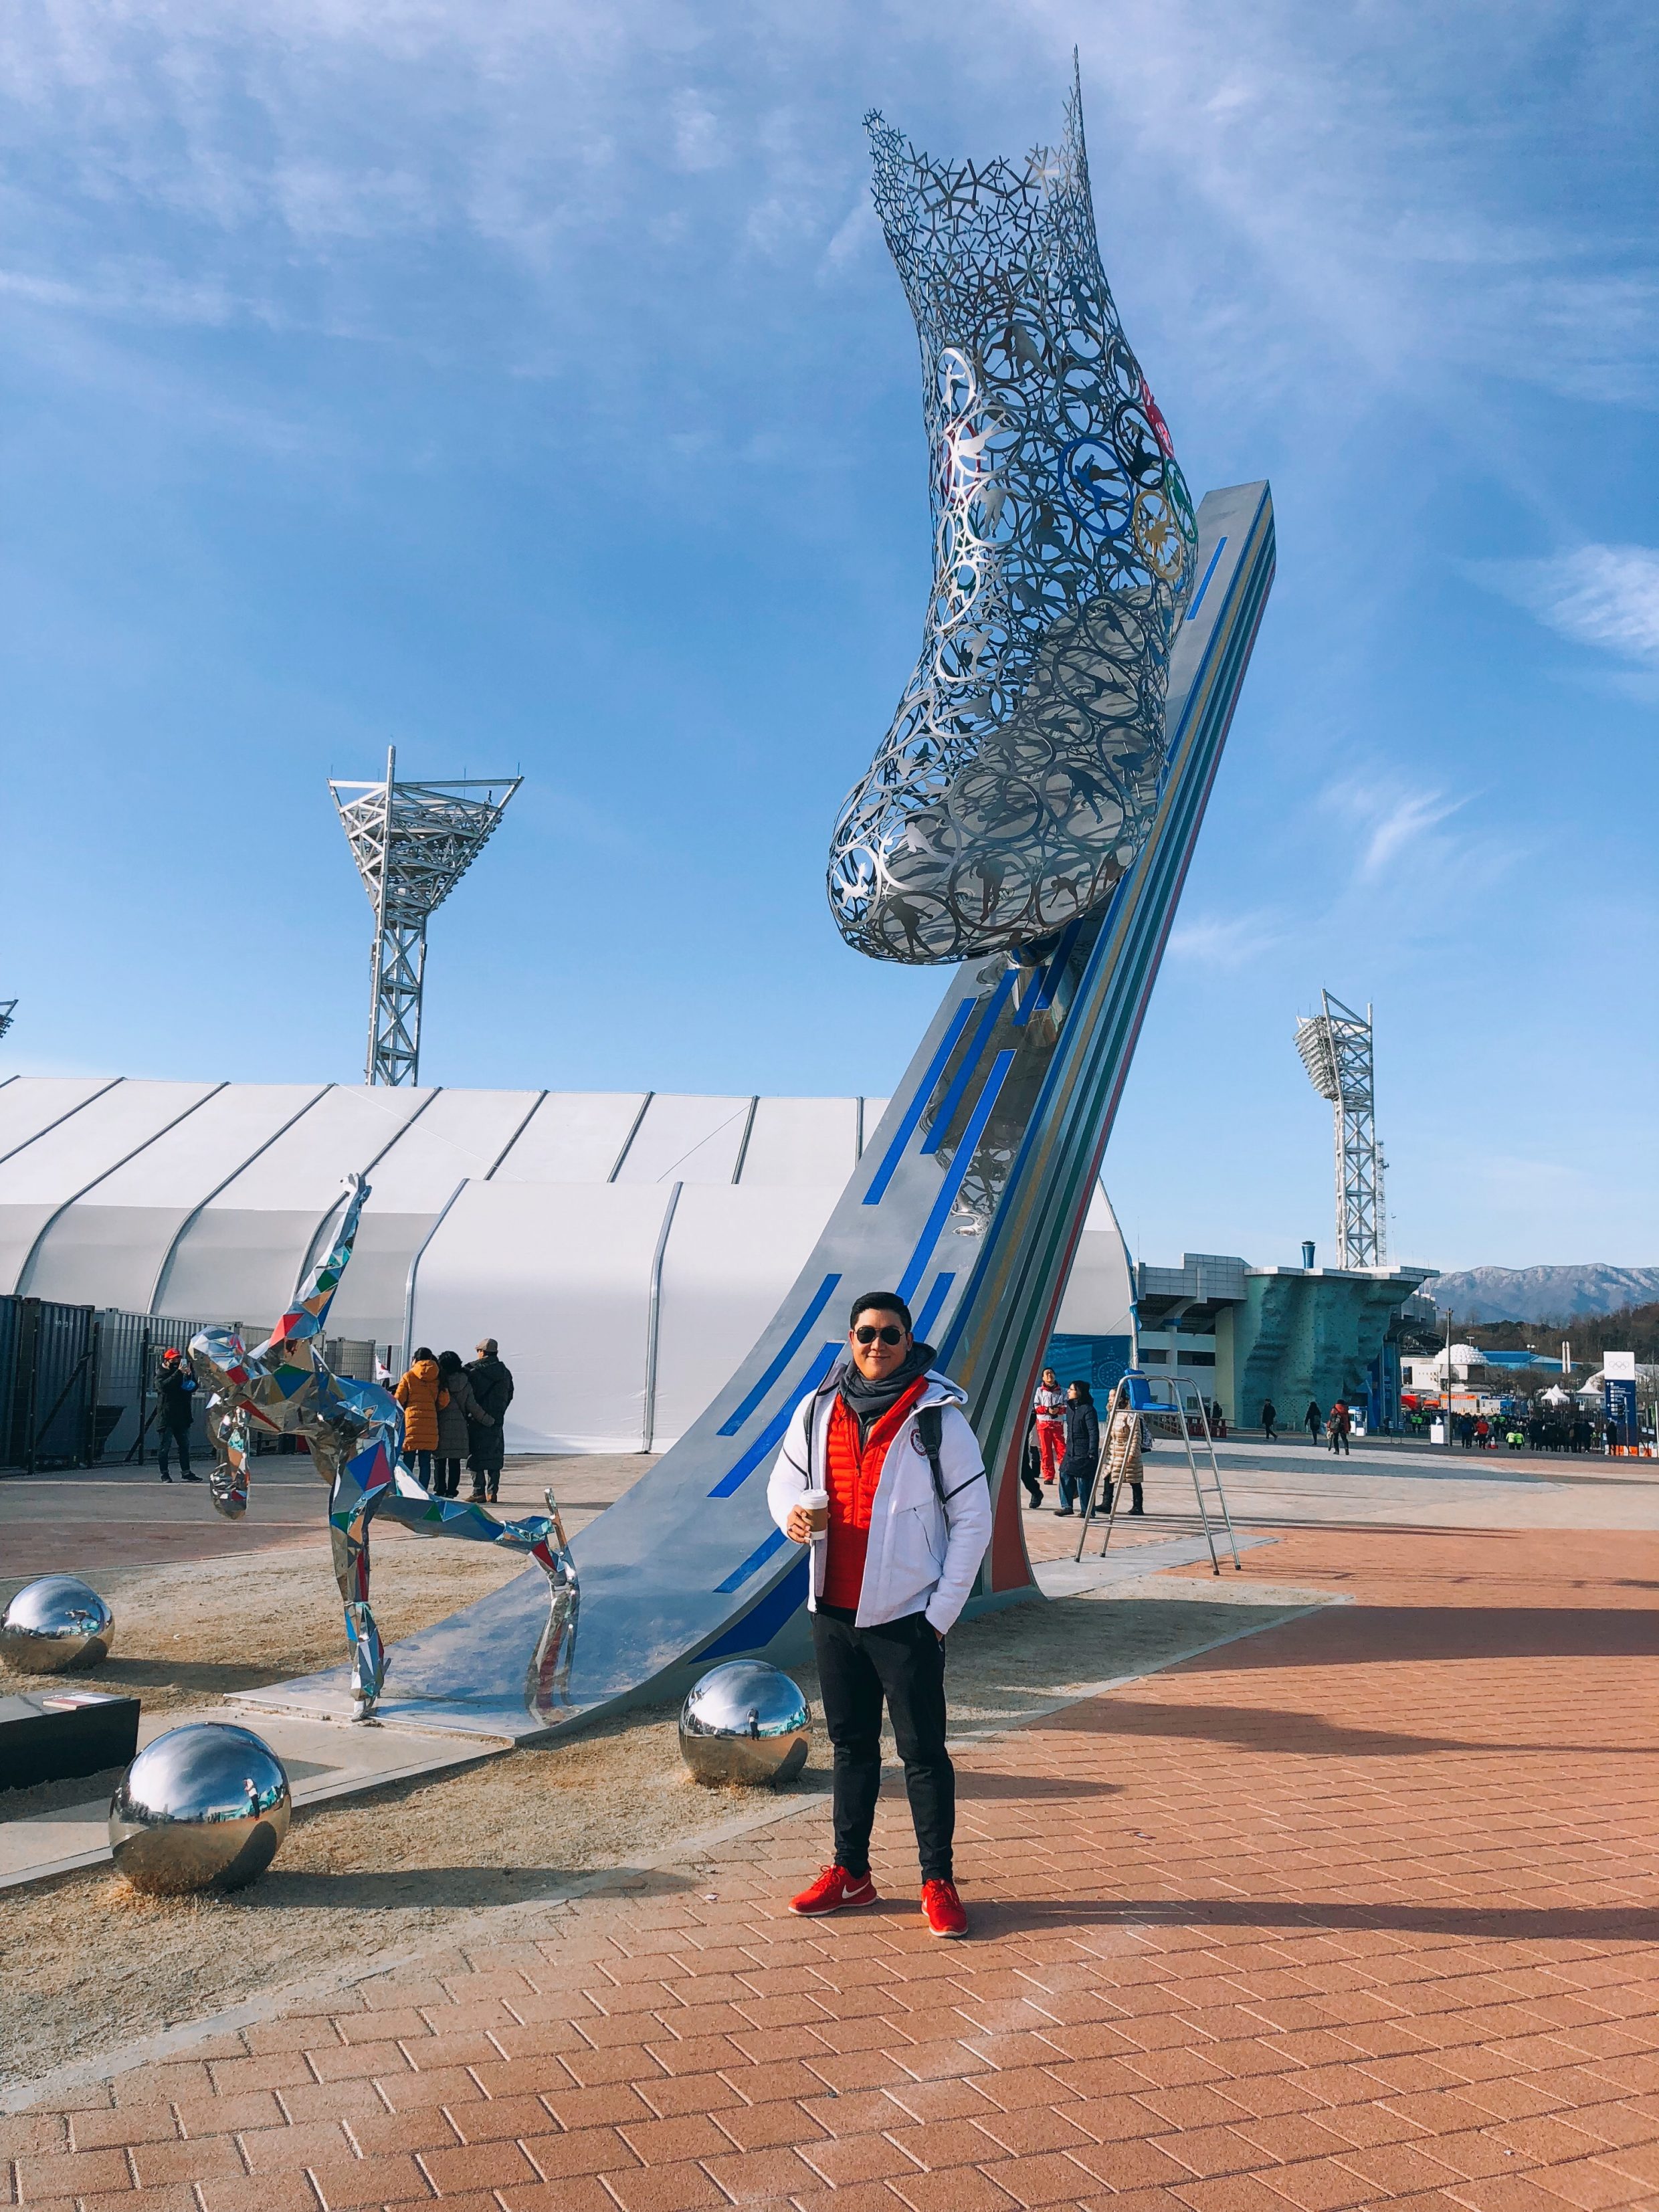 Johnny Van at Gangneung Olympic Park during the 2018 PyeongChang Winter Olympics wearing Team USA Nike